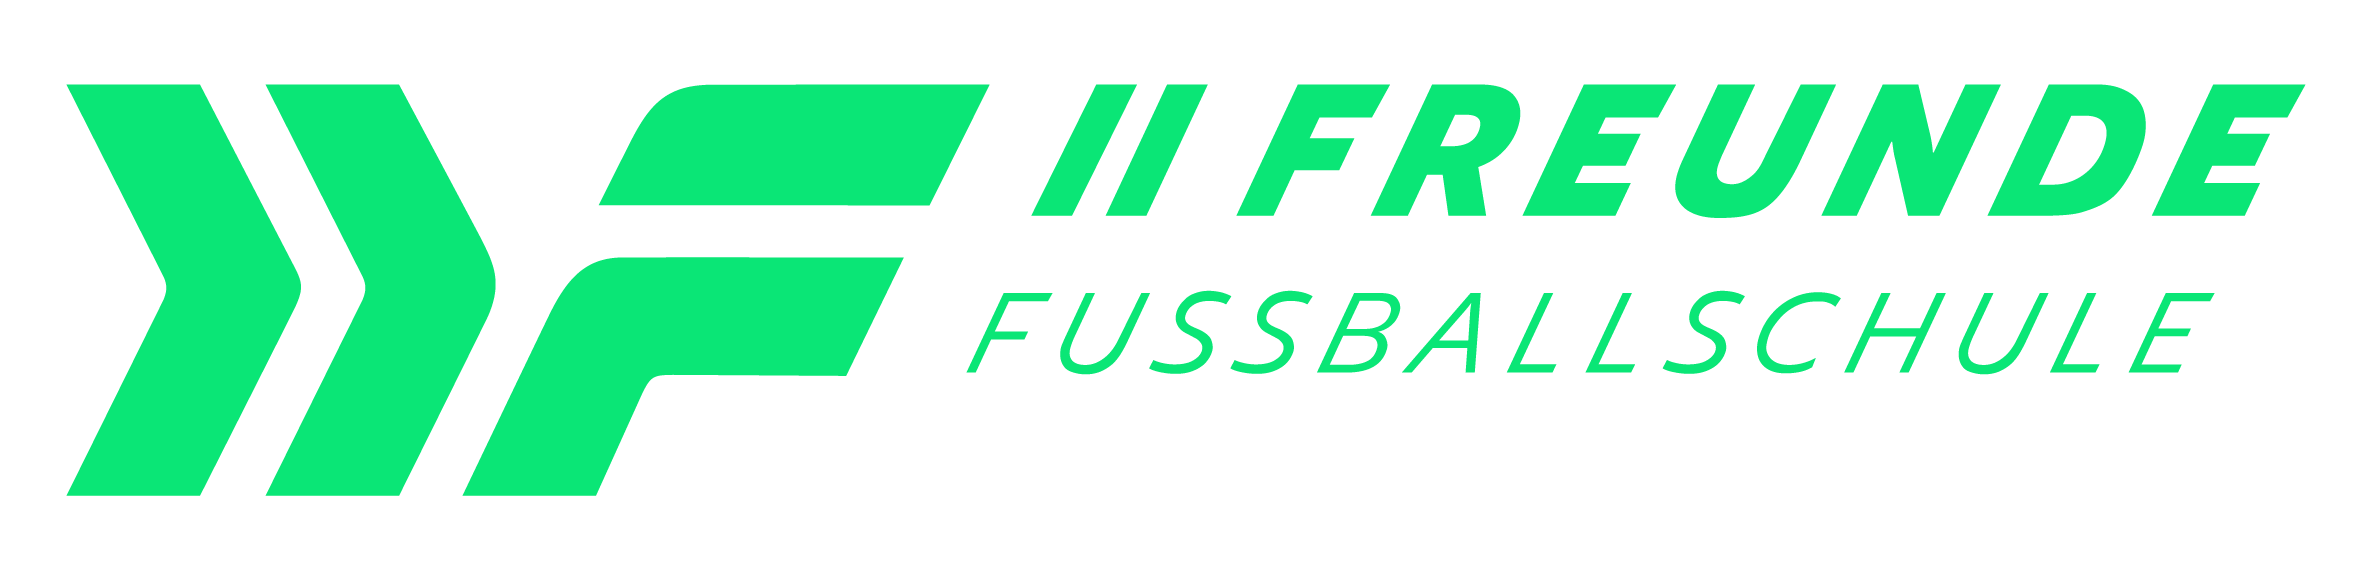 11Freunde-Fussballschule